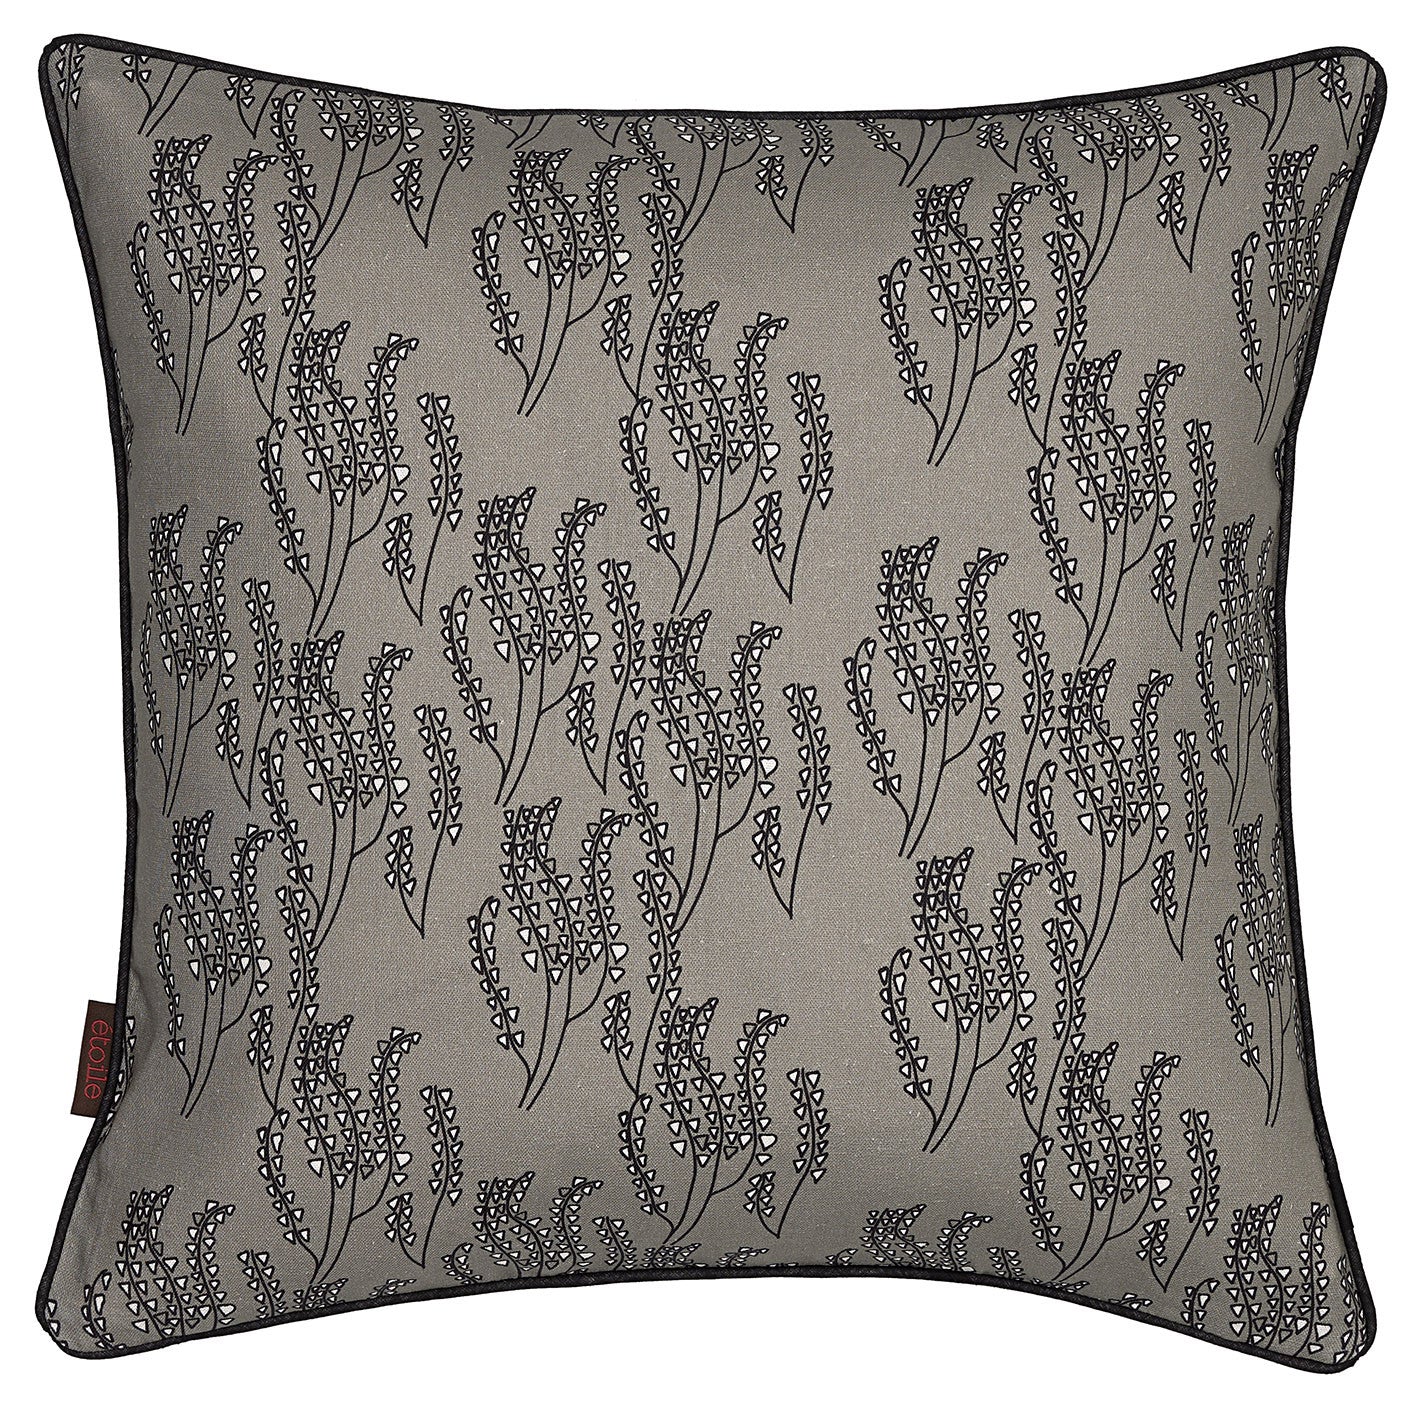 Maricopa Floral Pattern Linen Cotton Decorative Throw Pillow in Dove Grey & Black 45x45cm (18x18")